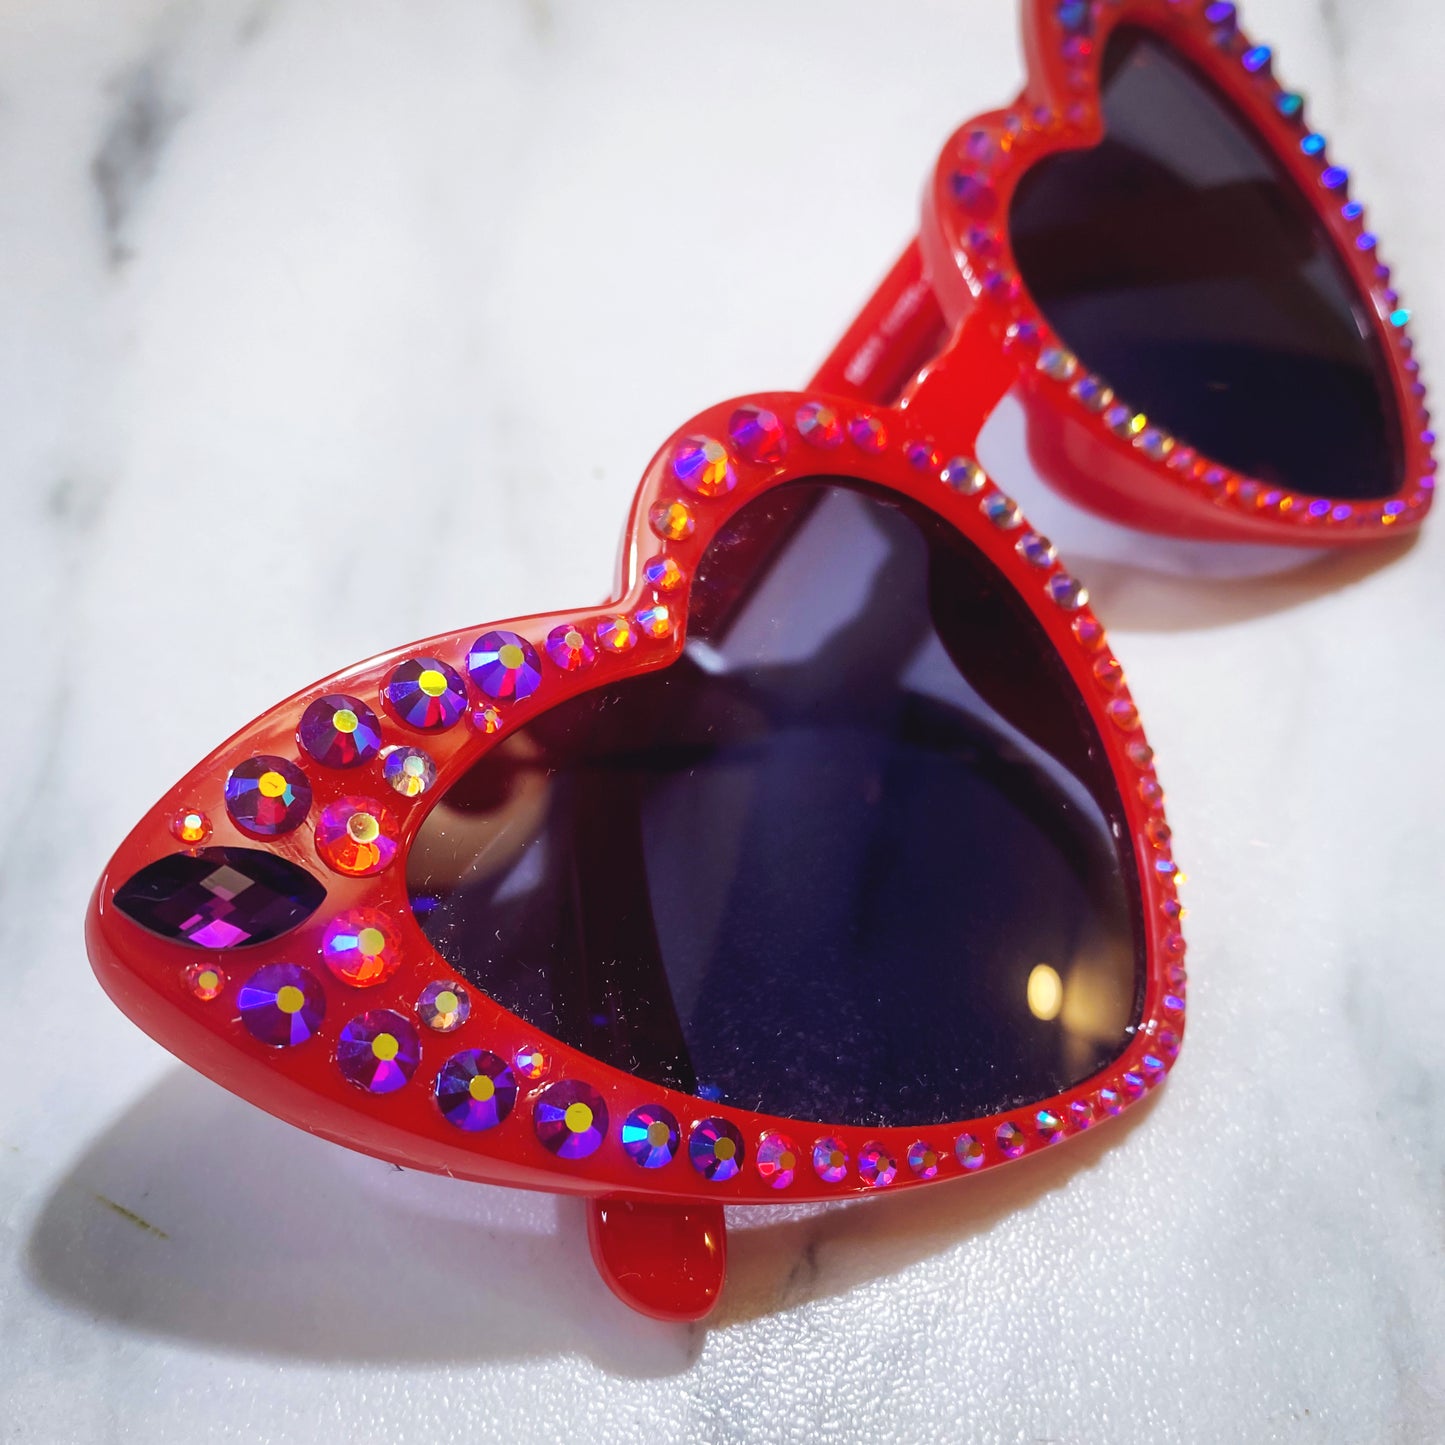 Rhinestone Sunglasses - Hearts